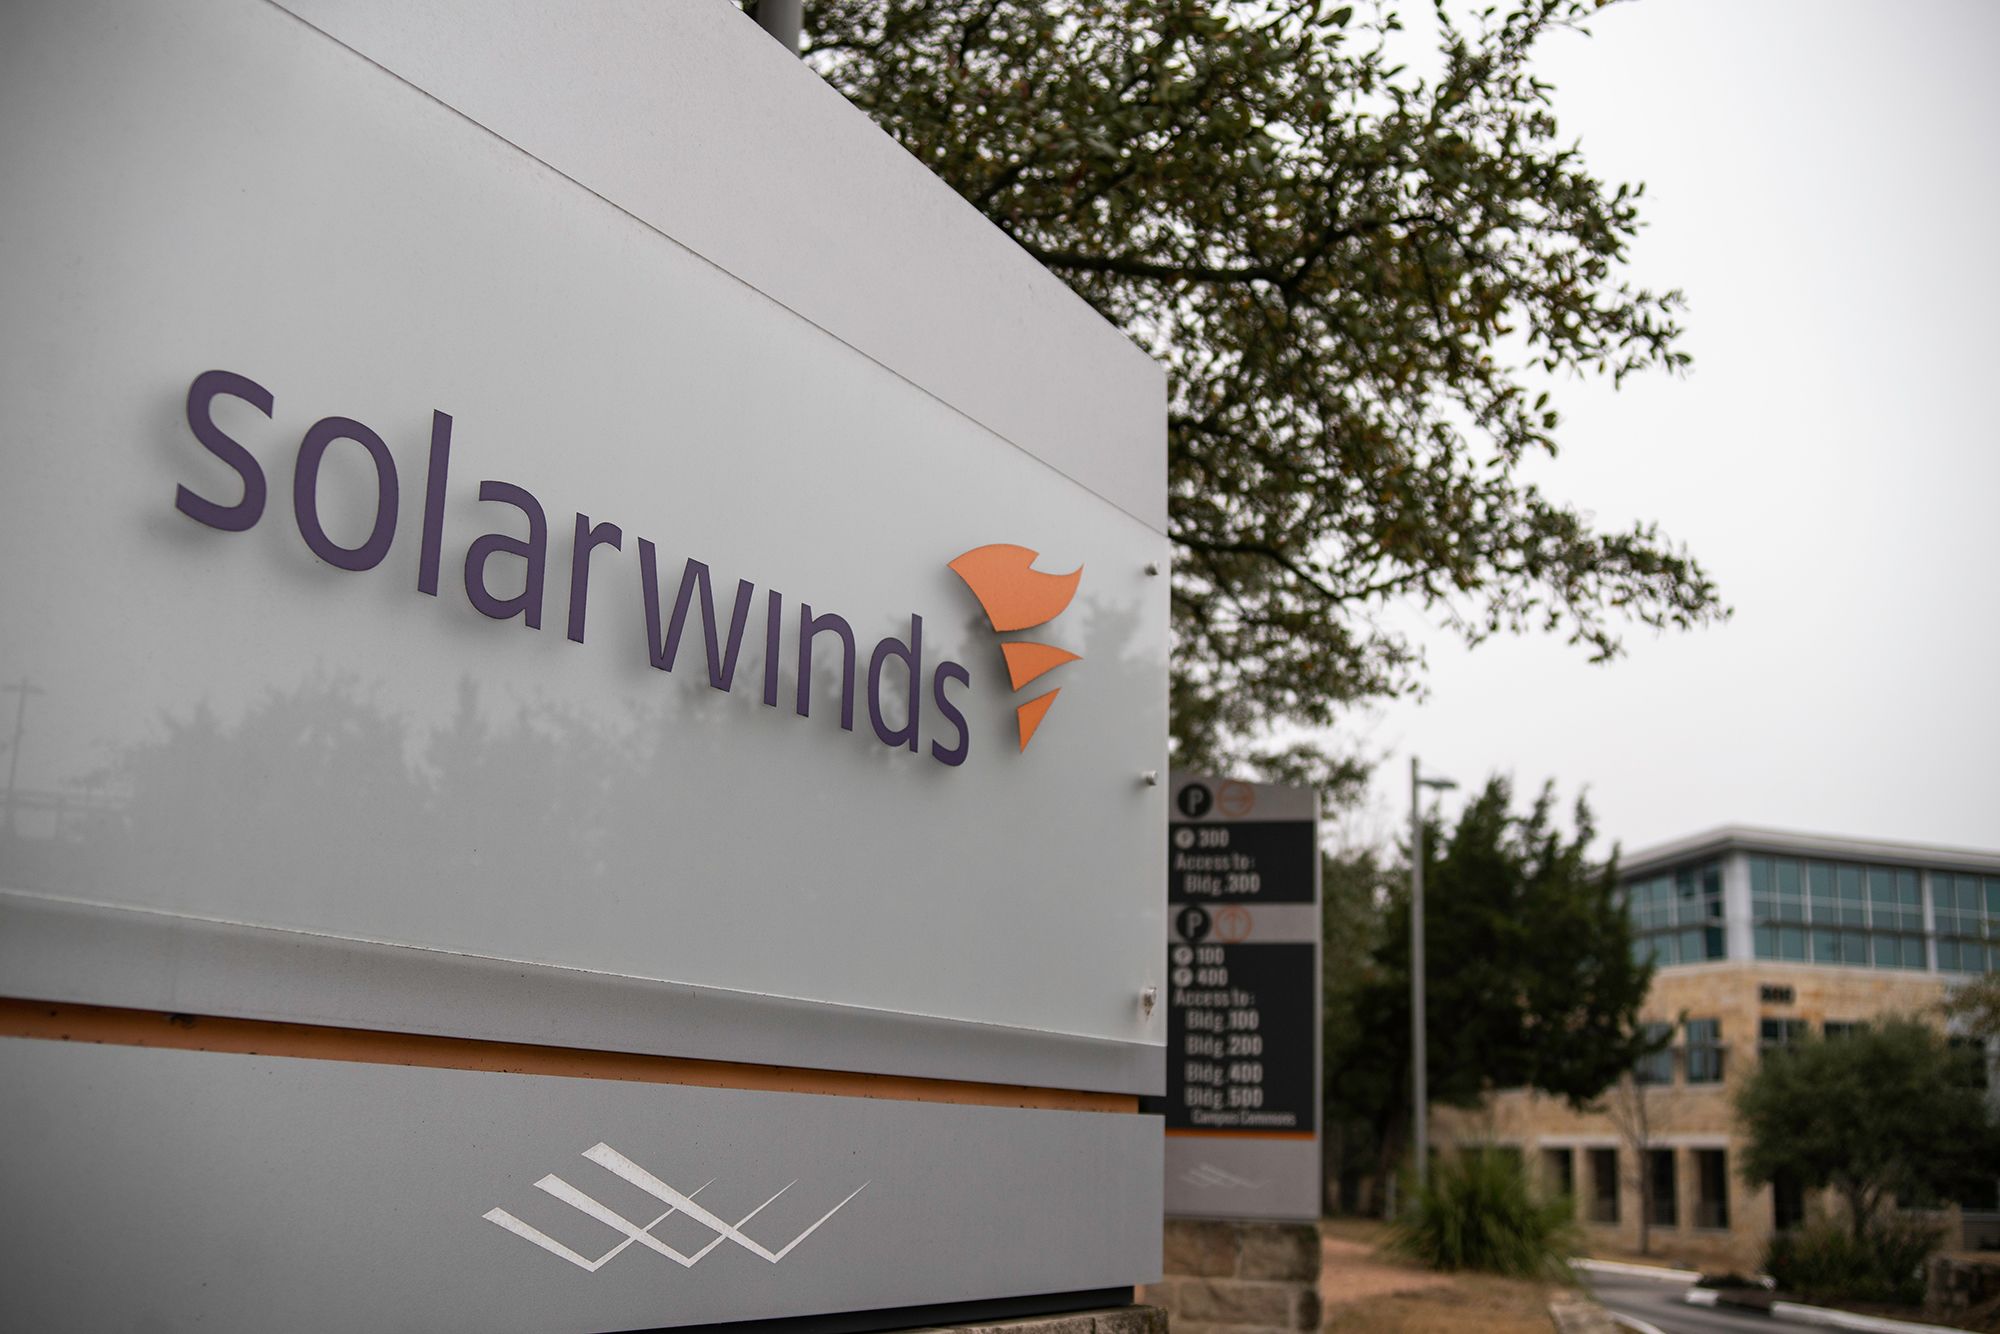 Former SolarWinds CEO blames intern for ‘solarwinds123’ password leak | CNN Politics